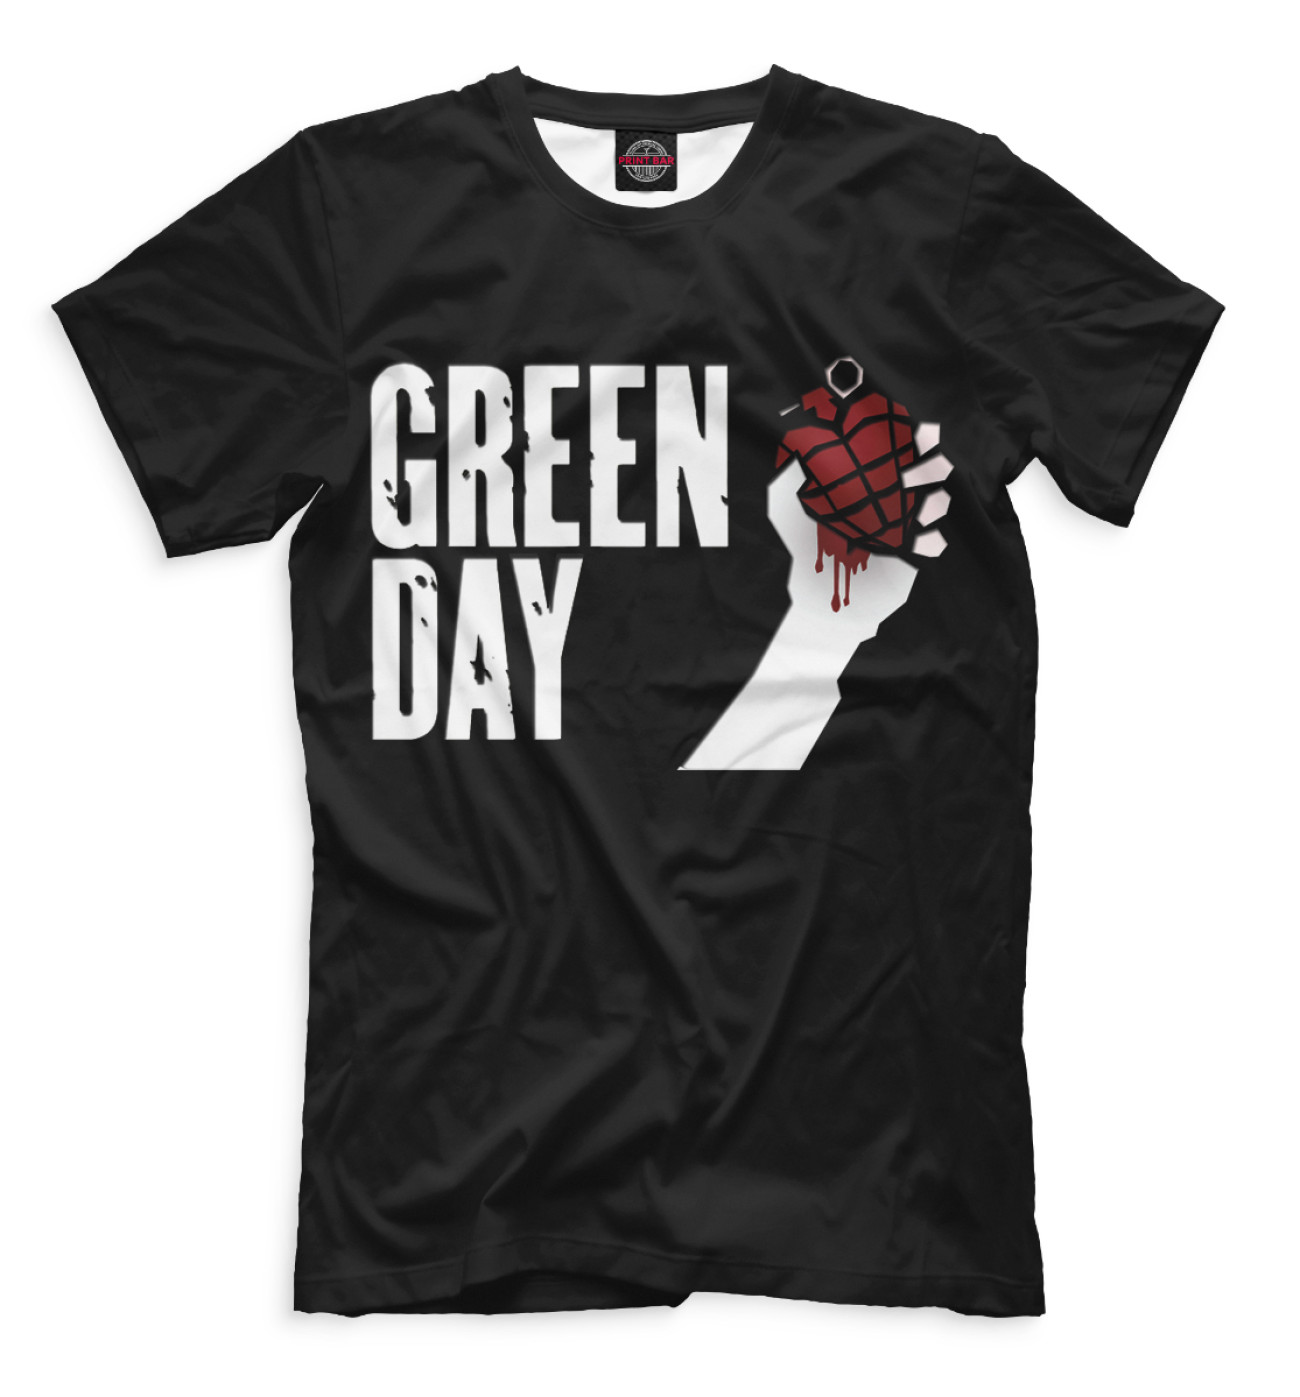 Мужская Футболка Green Day, артикул: GRE-315032-fut-2